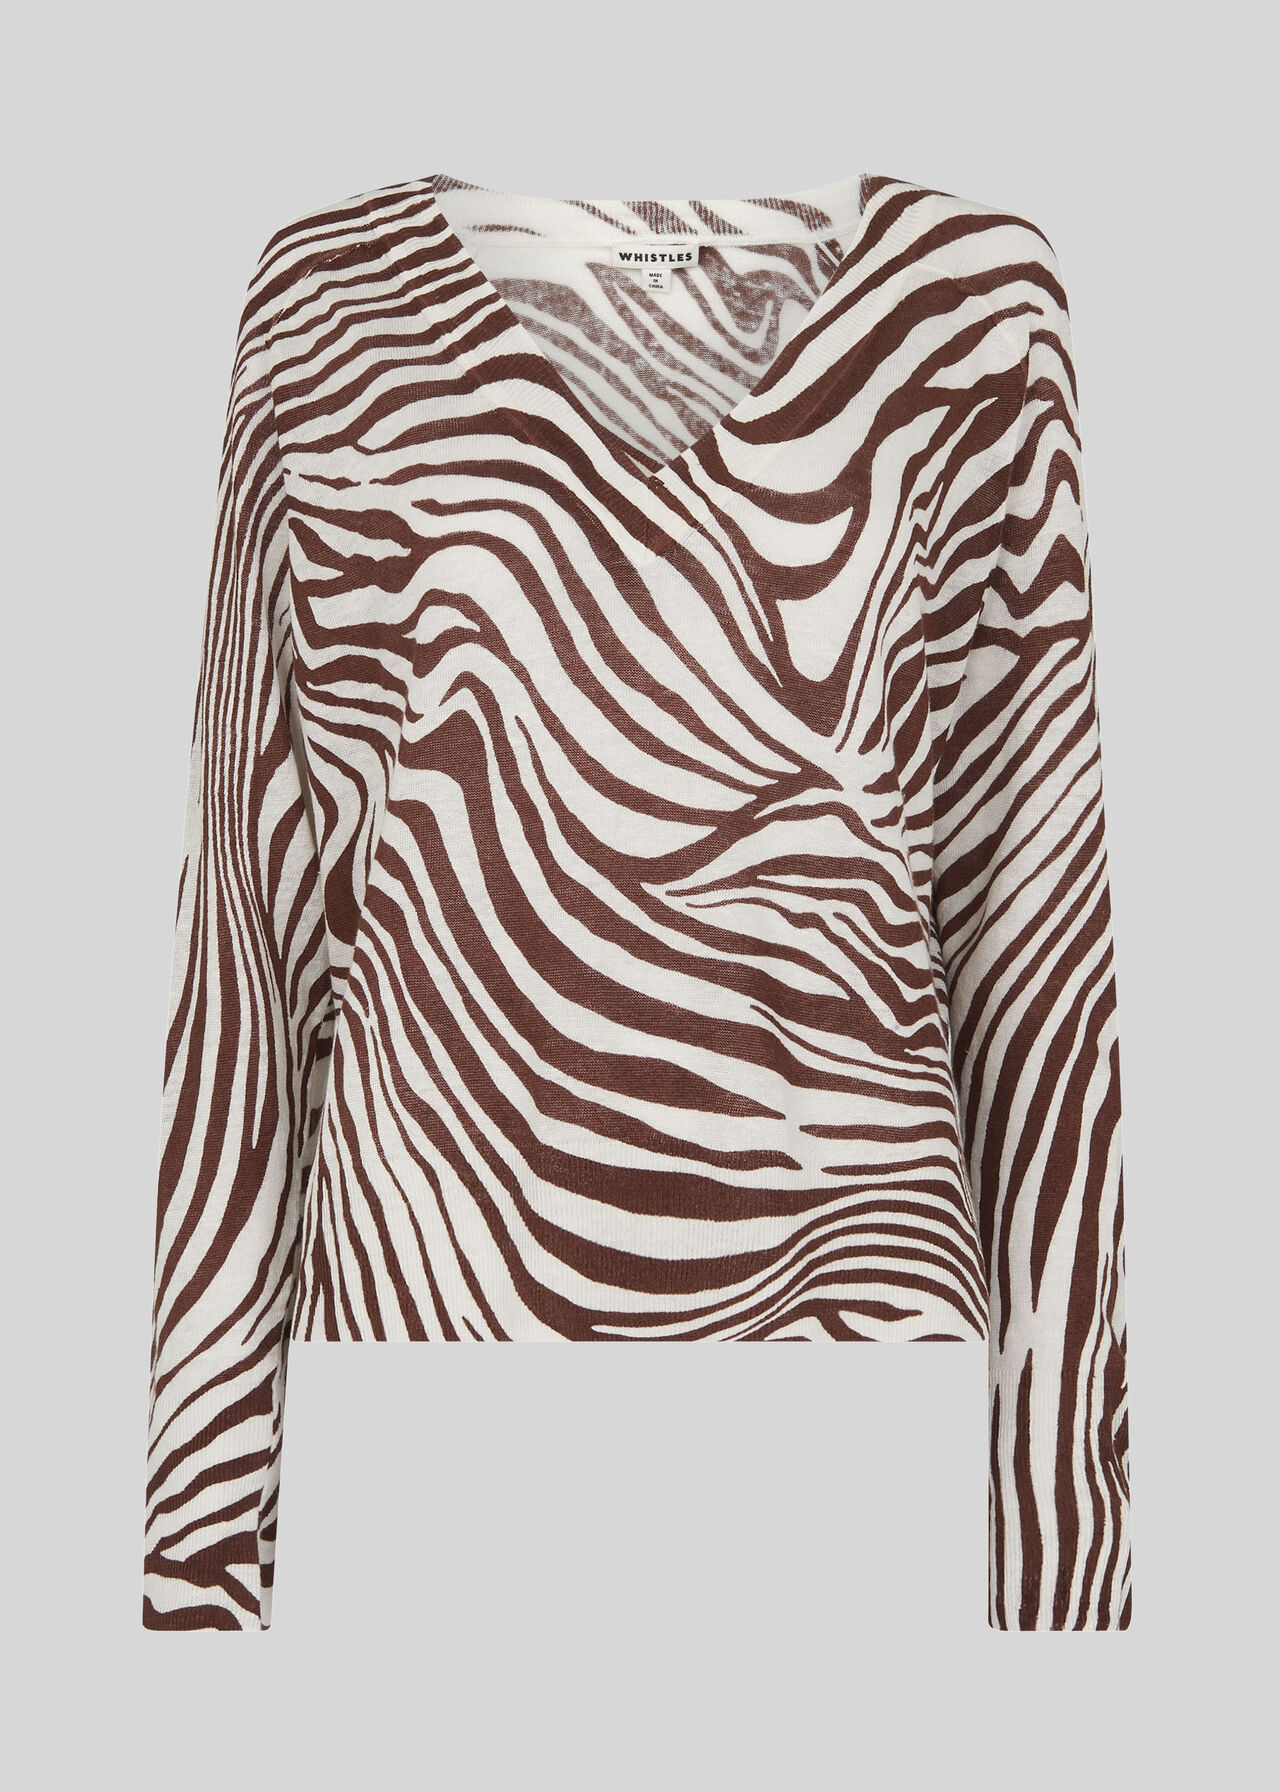 Graphic Zebra Print Linen Knit Brown/Multi